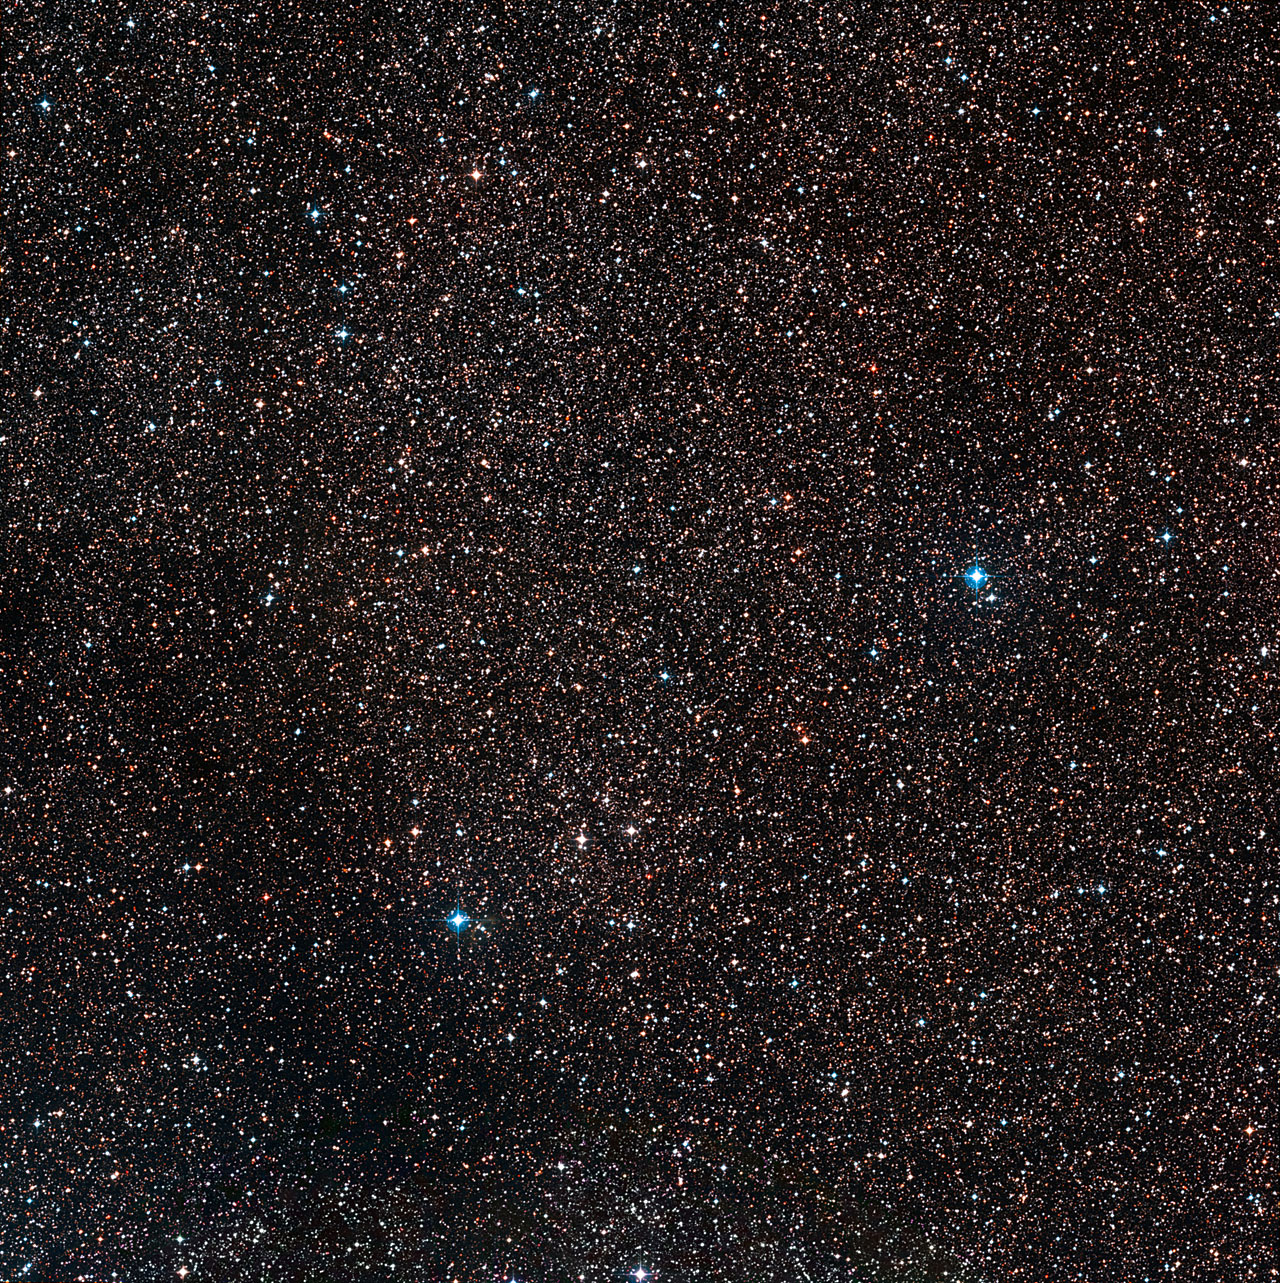 The sky around the location of Nova Centauri 2013